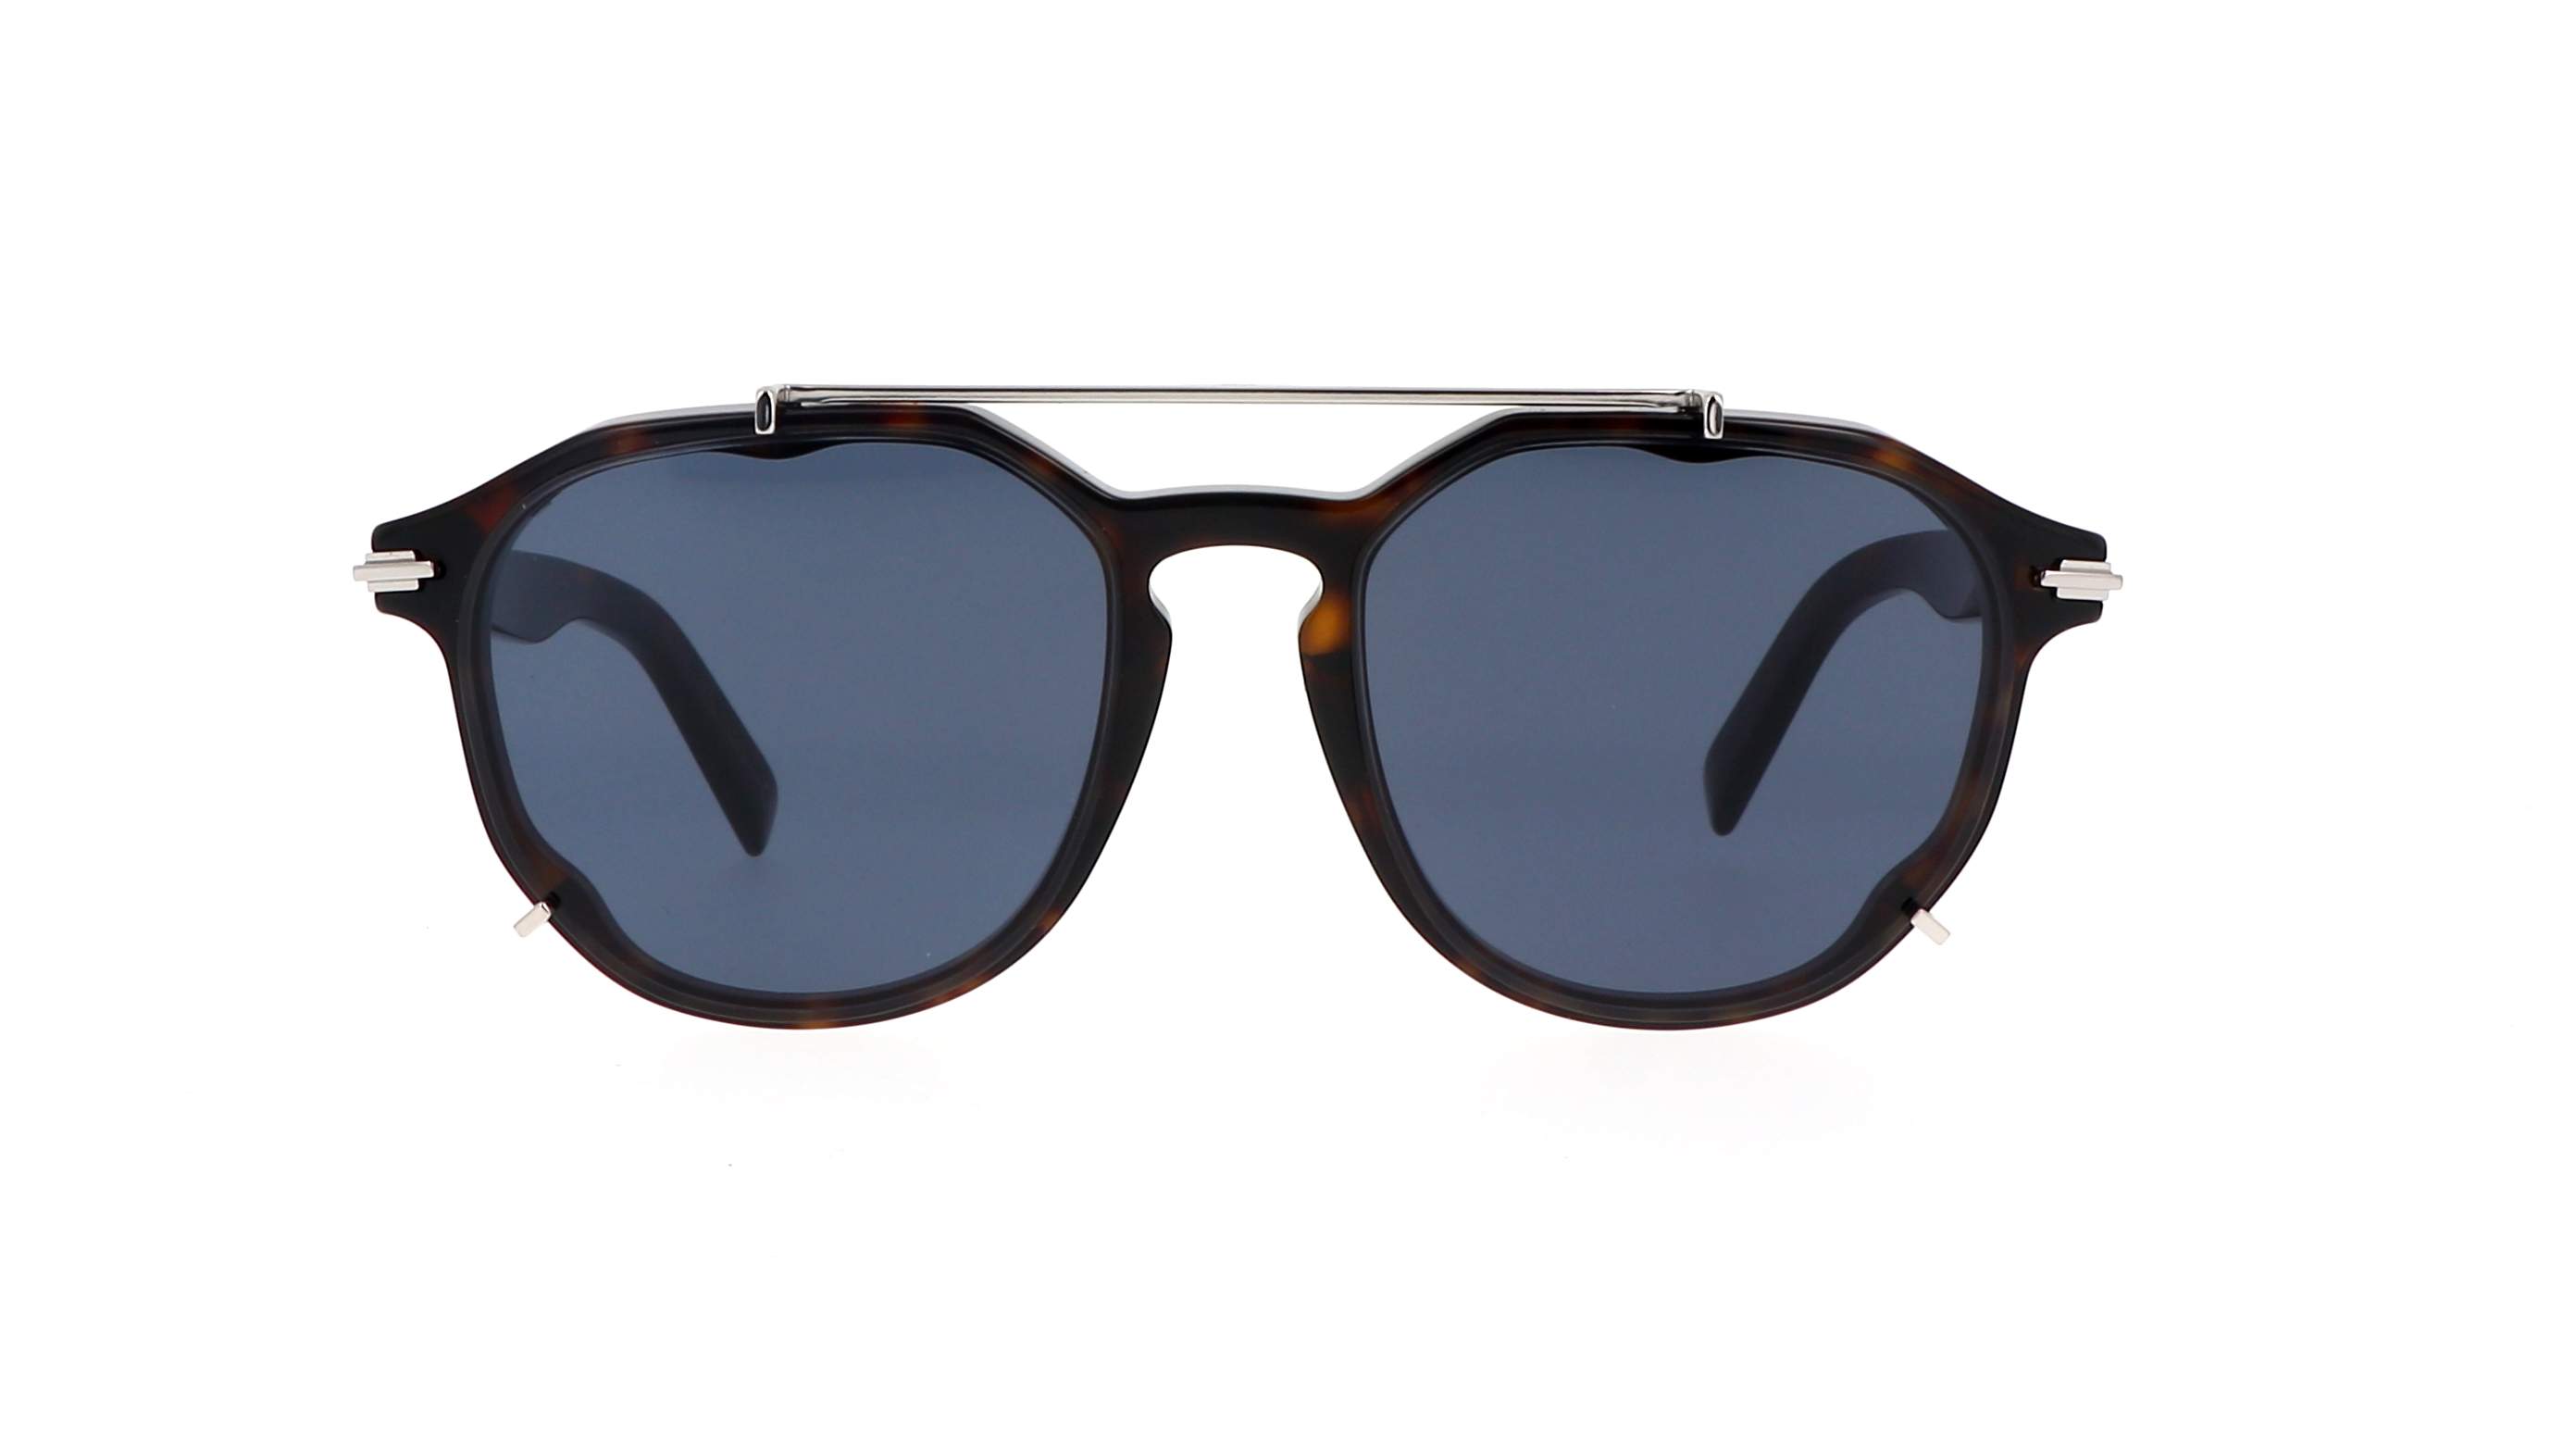 Dior Black Matte Round Sunglasses  diorsoreal 48  Round sunglasses  Christian dior sunglasses Sunglasses